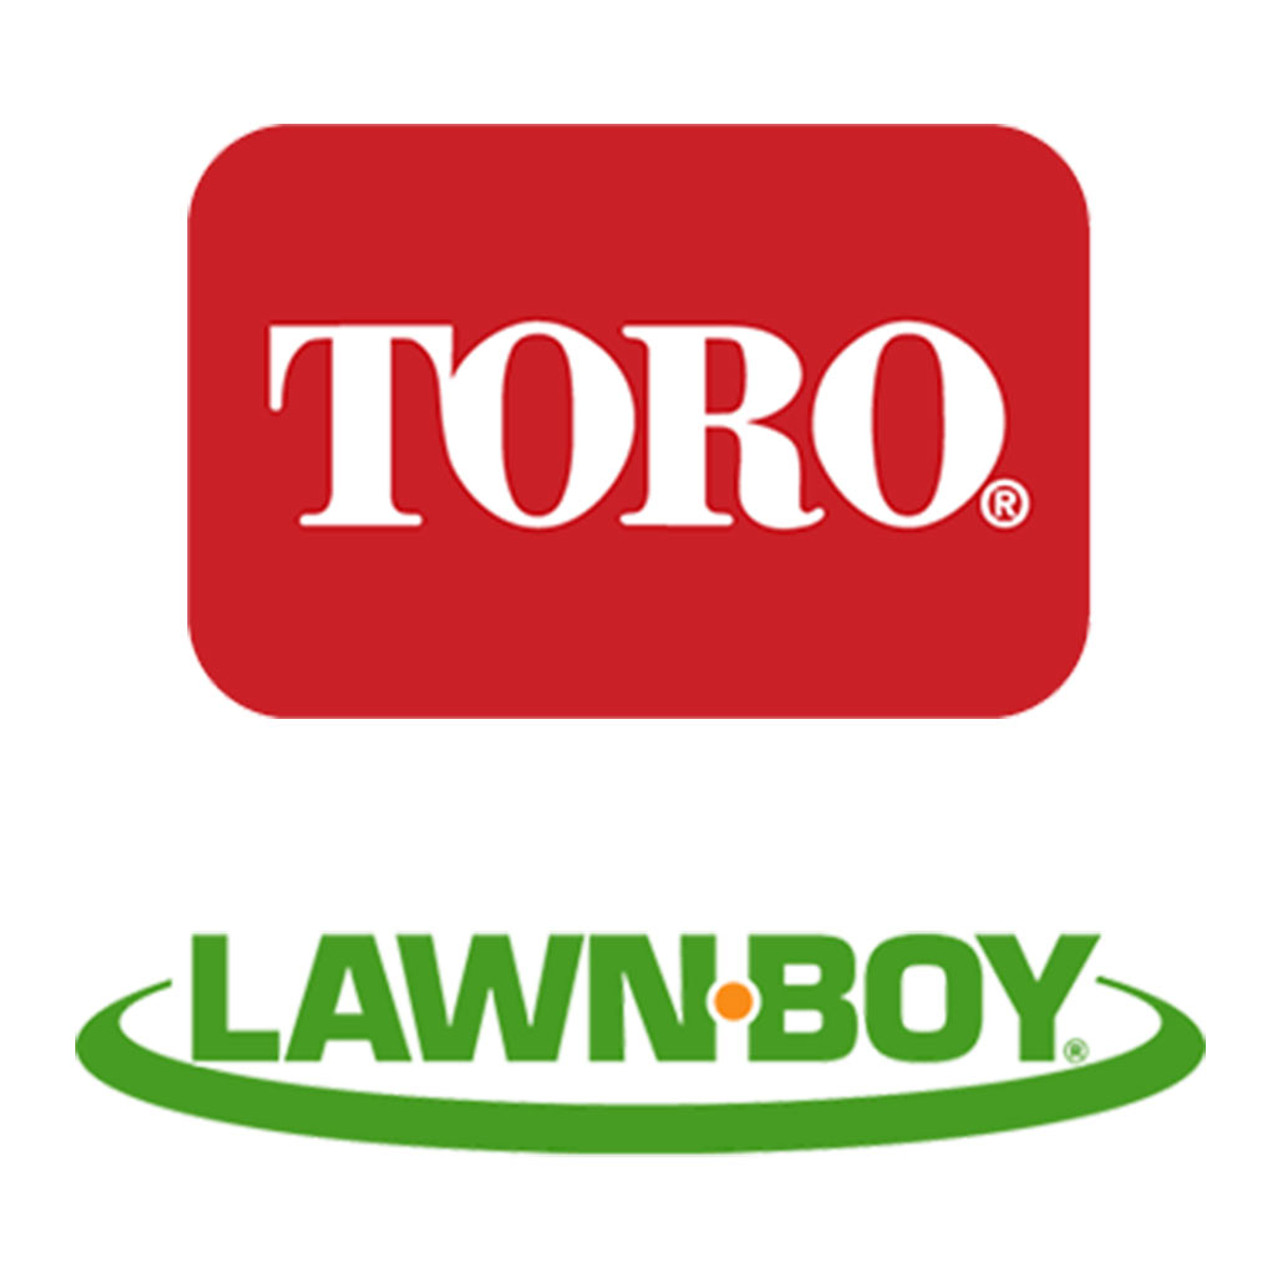 Toro Lawn-Boy 115-9613 V-Belt